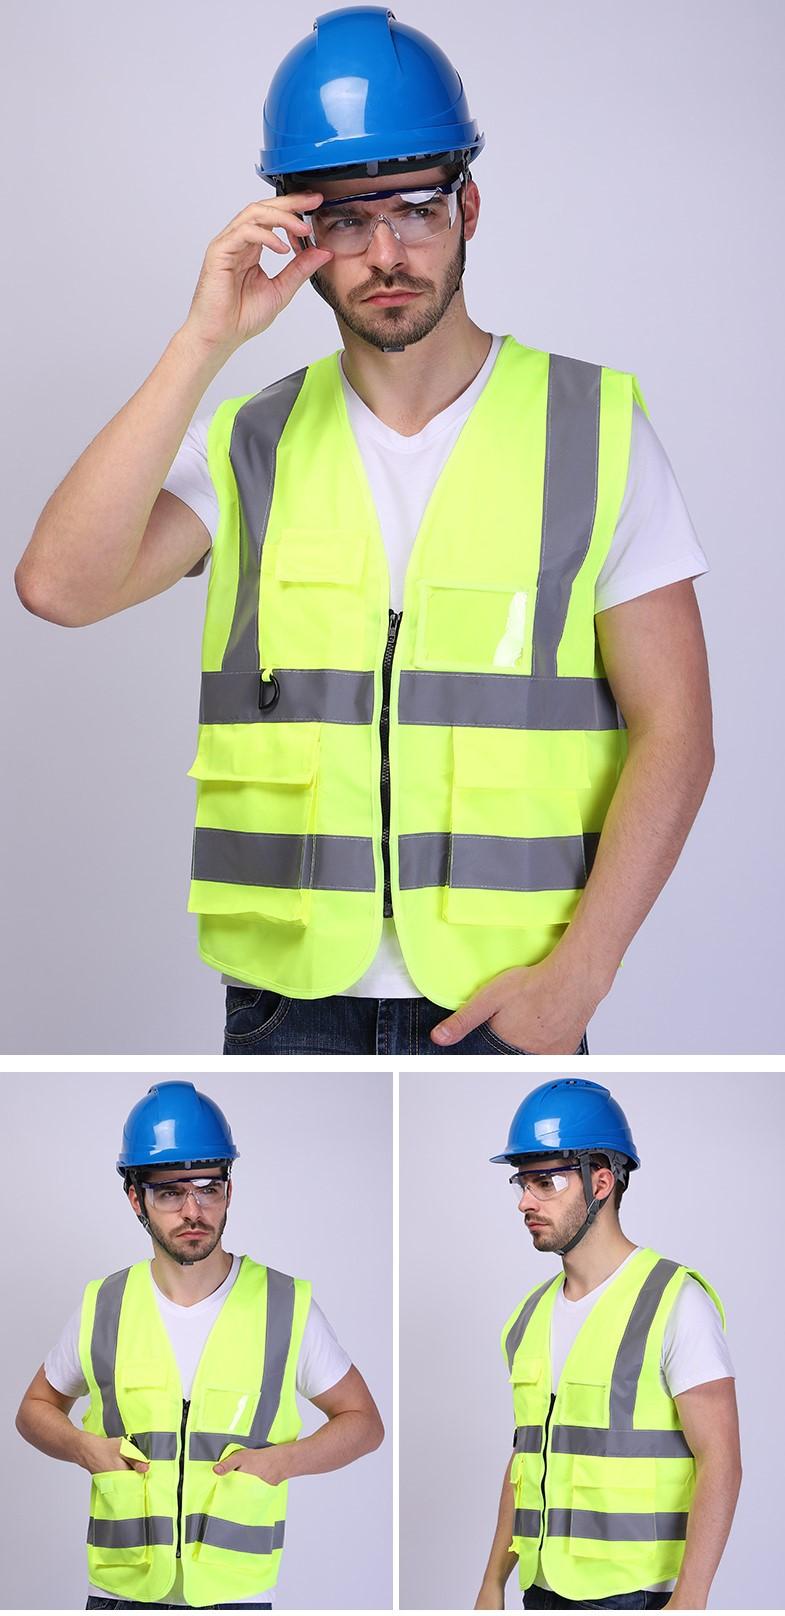 D-Box  Safety Vest ，Reflective Vest、Work Safety,Safety Products  ความปลอดภัยเสื้อกั๊กสะท้อนแสงสูงสะท้อนแสงเพื่อความปลอดภัยเสื้อกั๊กมีซิป